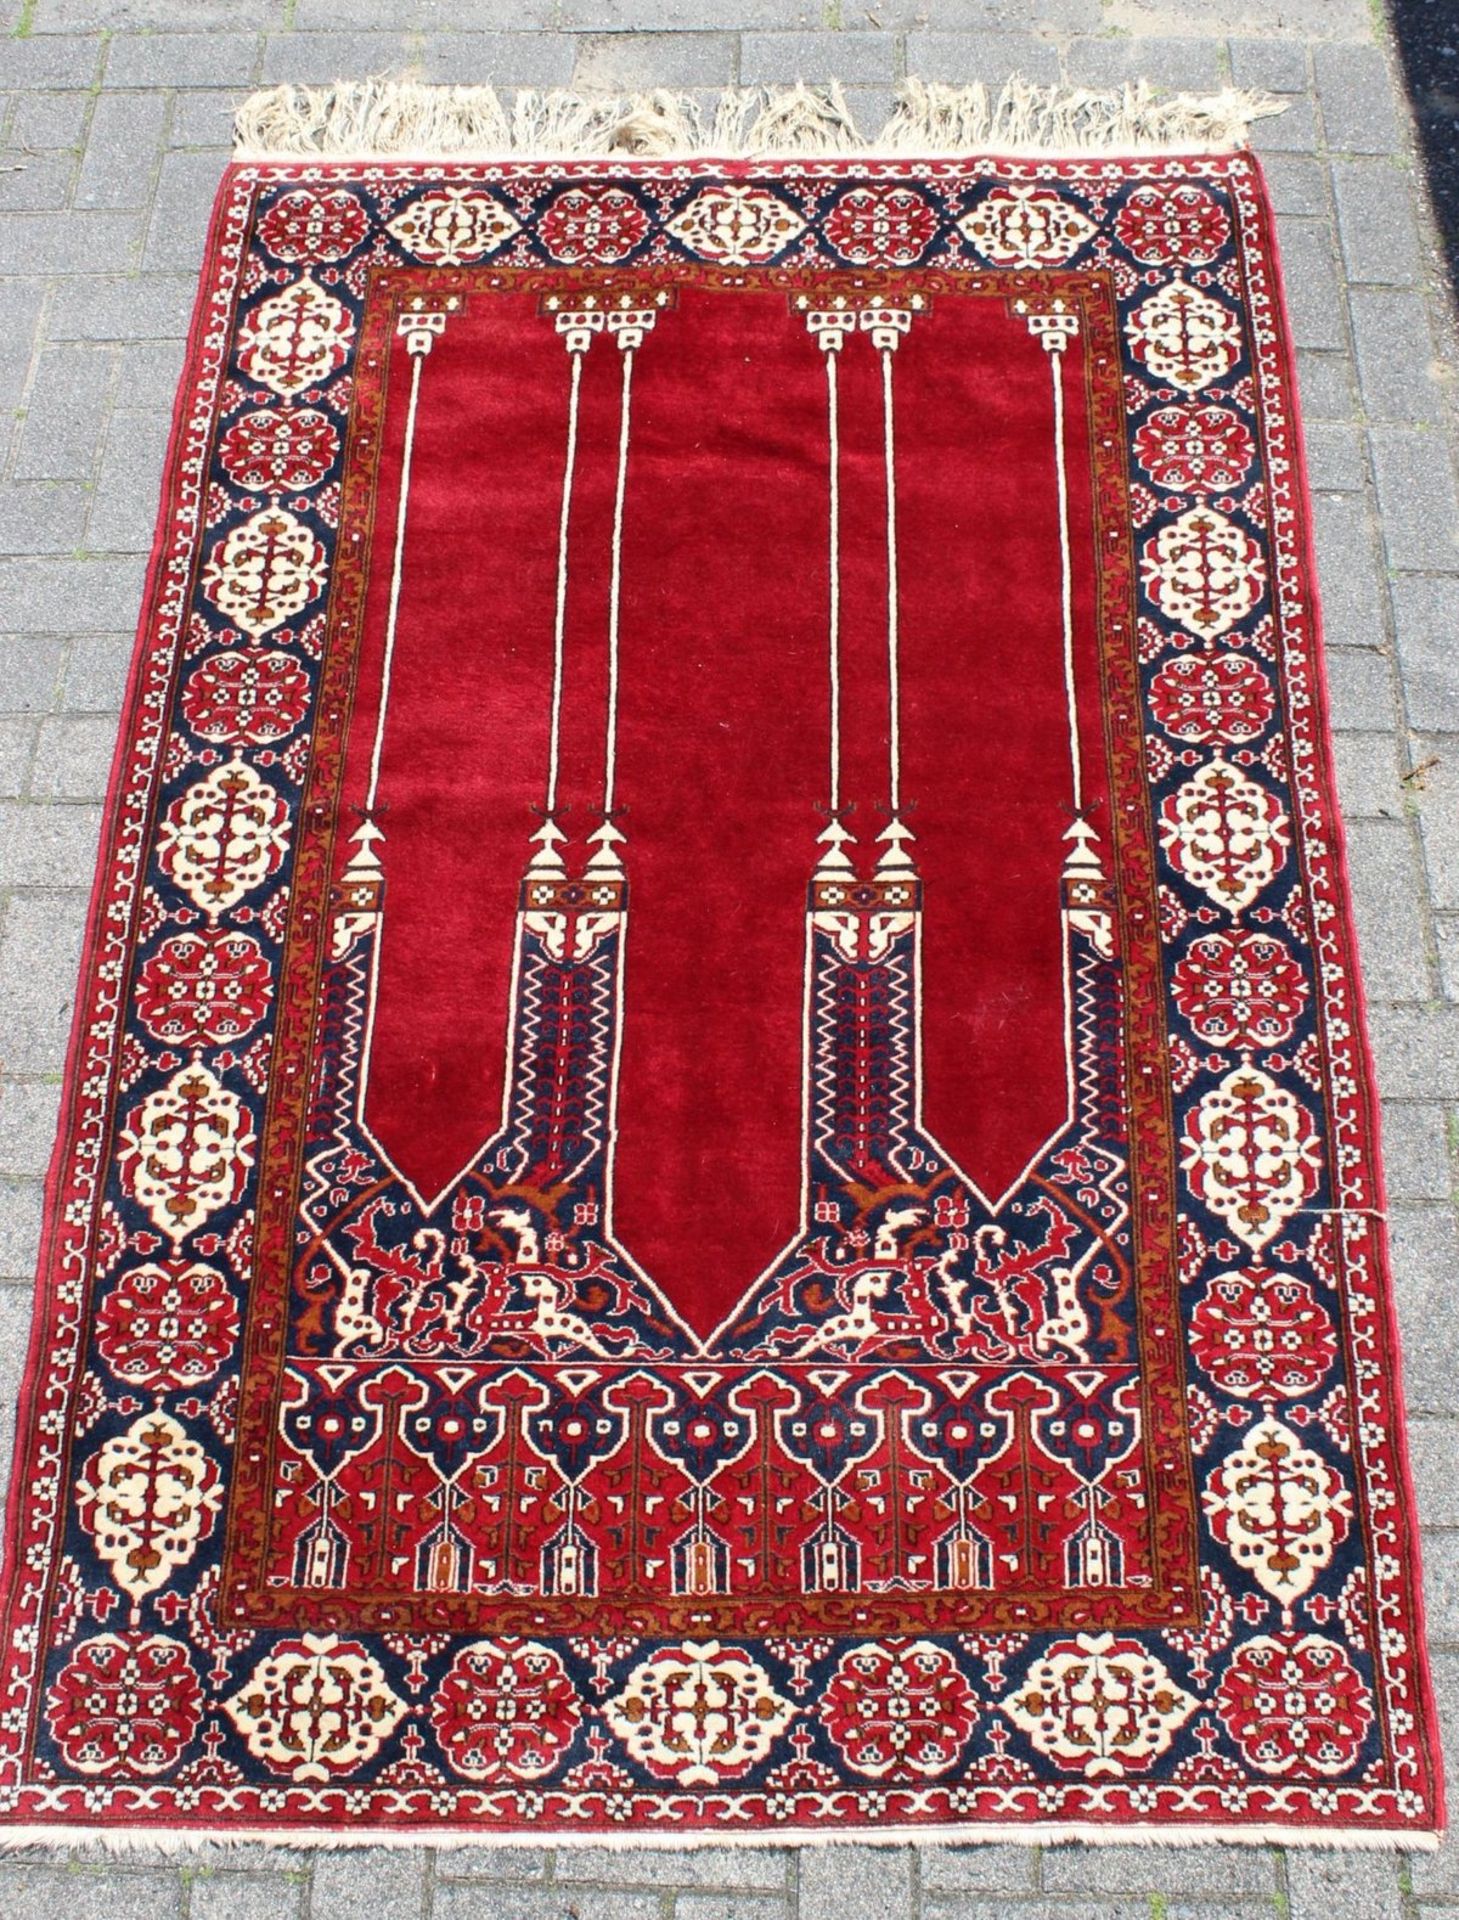 Orientteppich, älter, rotgrundig, ca. 200 x 130cm. 